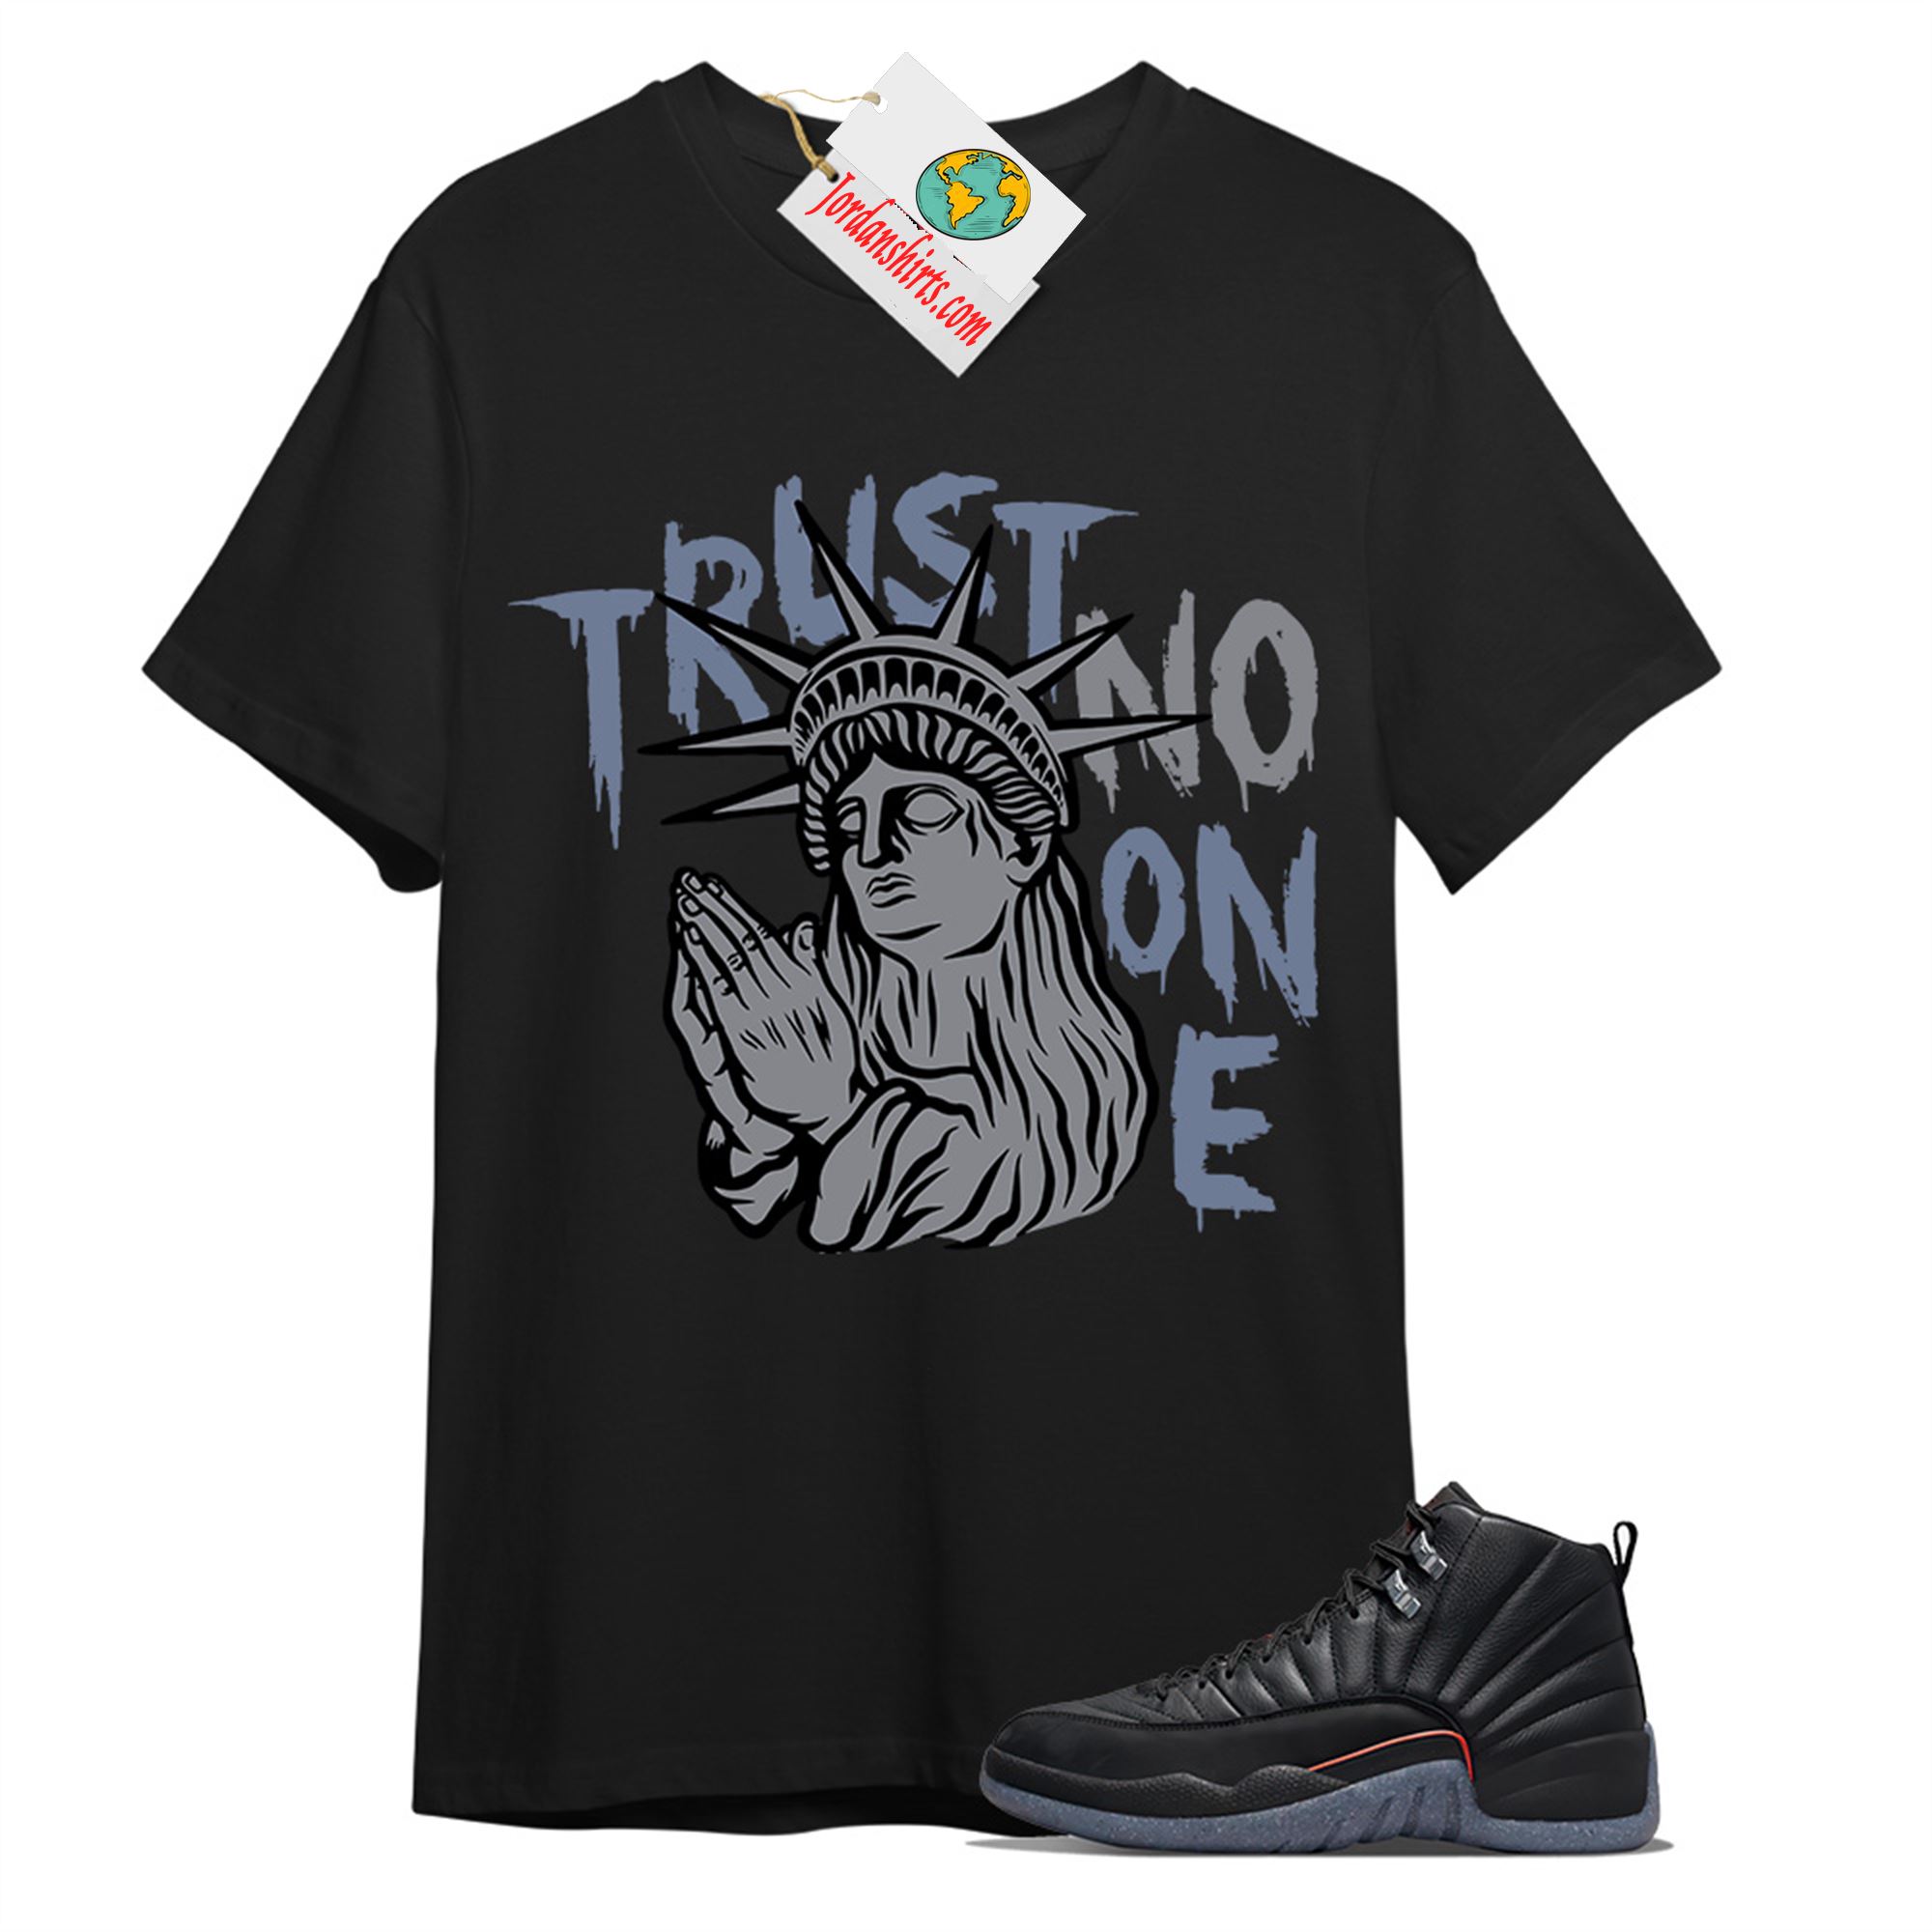 Jordan 12 Shirt, Trust No One Statue Of Liberty Black T-shirt Air Jordan 12 Utility Grind 12s Size Up To 5xl